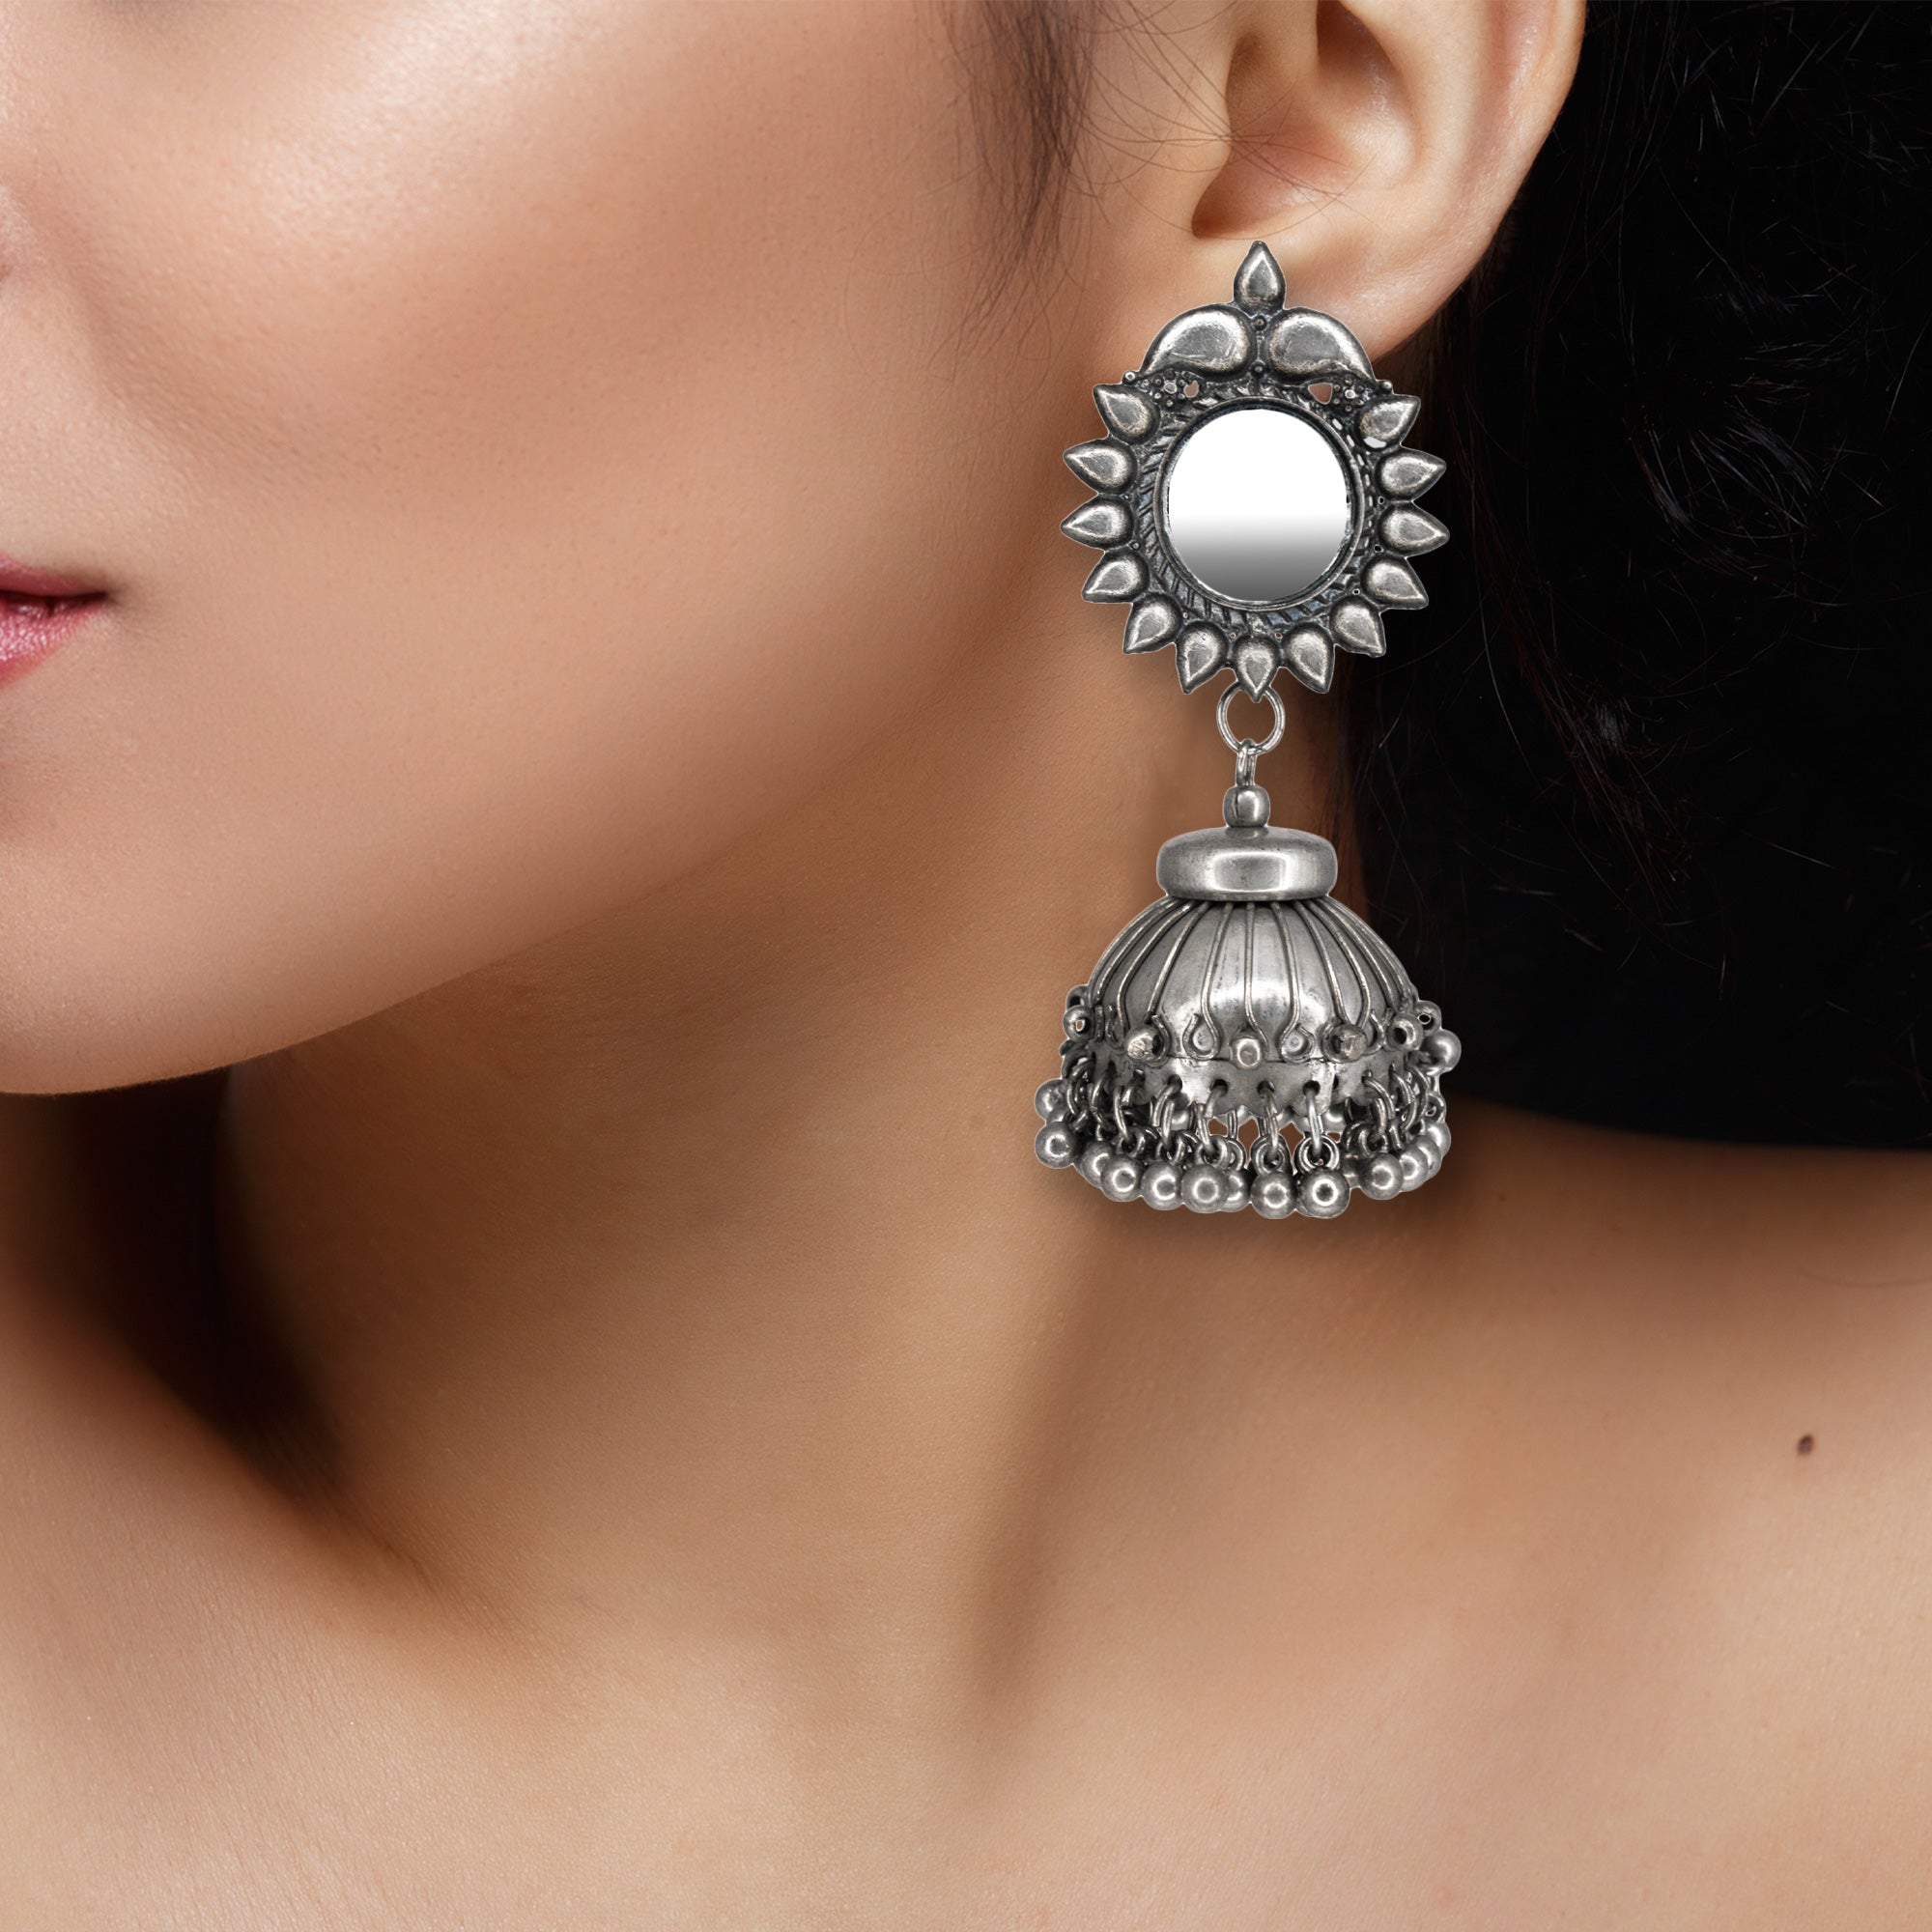 Abhinn Handmade Silver Oxidised Mirror Stud Jhumki Earrings For Women